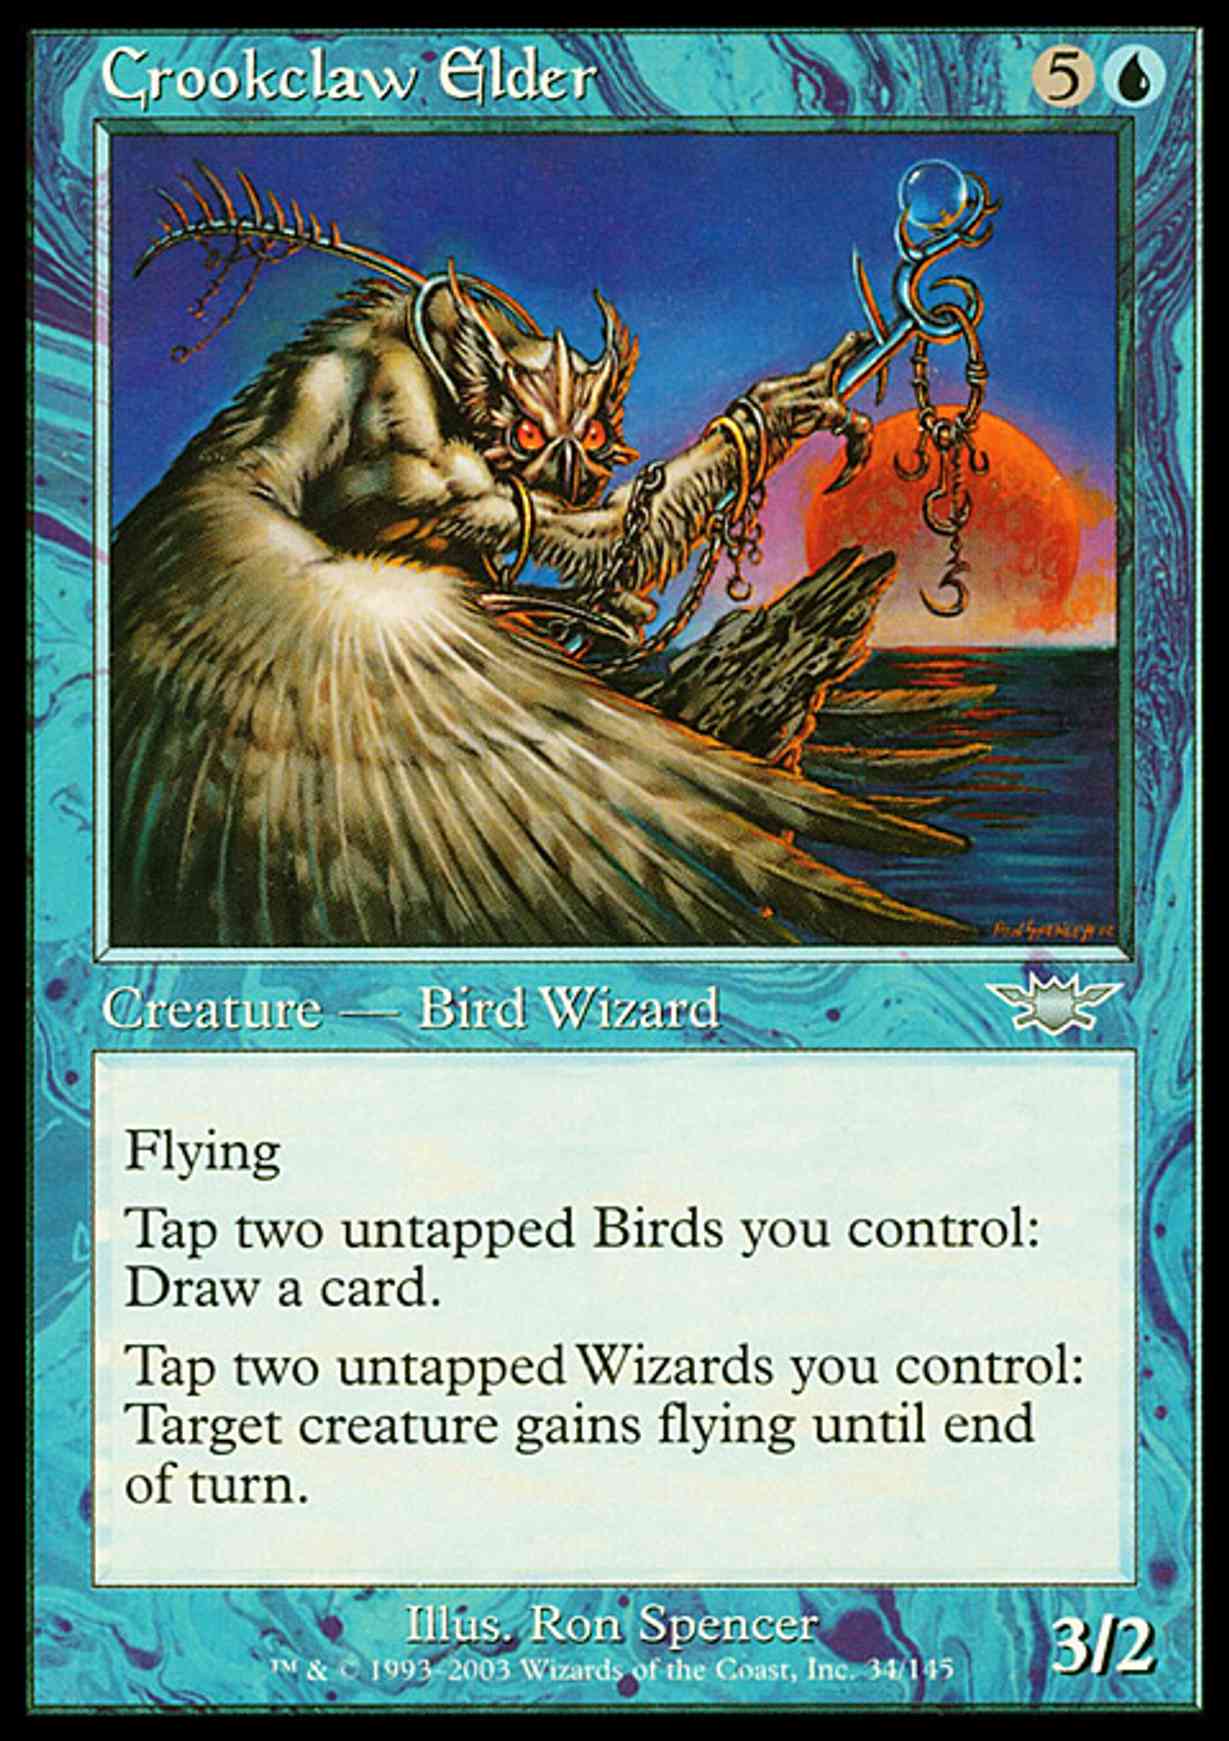 Crookclaw Elder magic card front